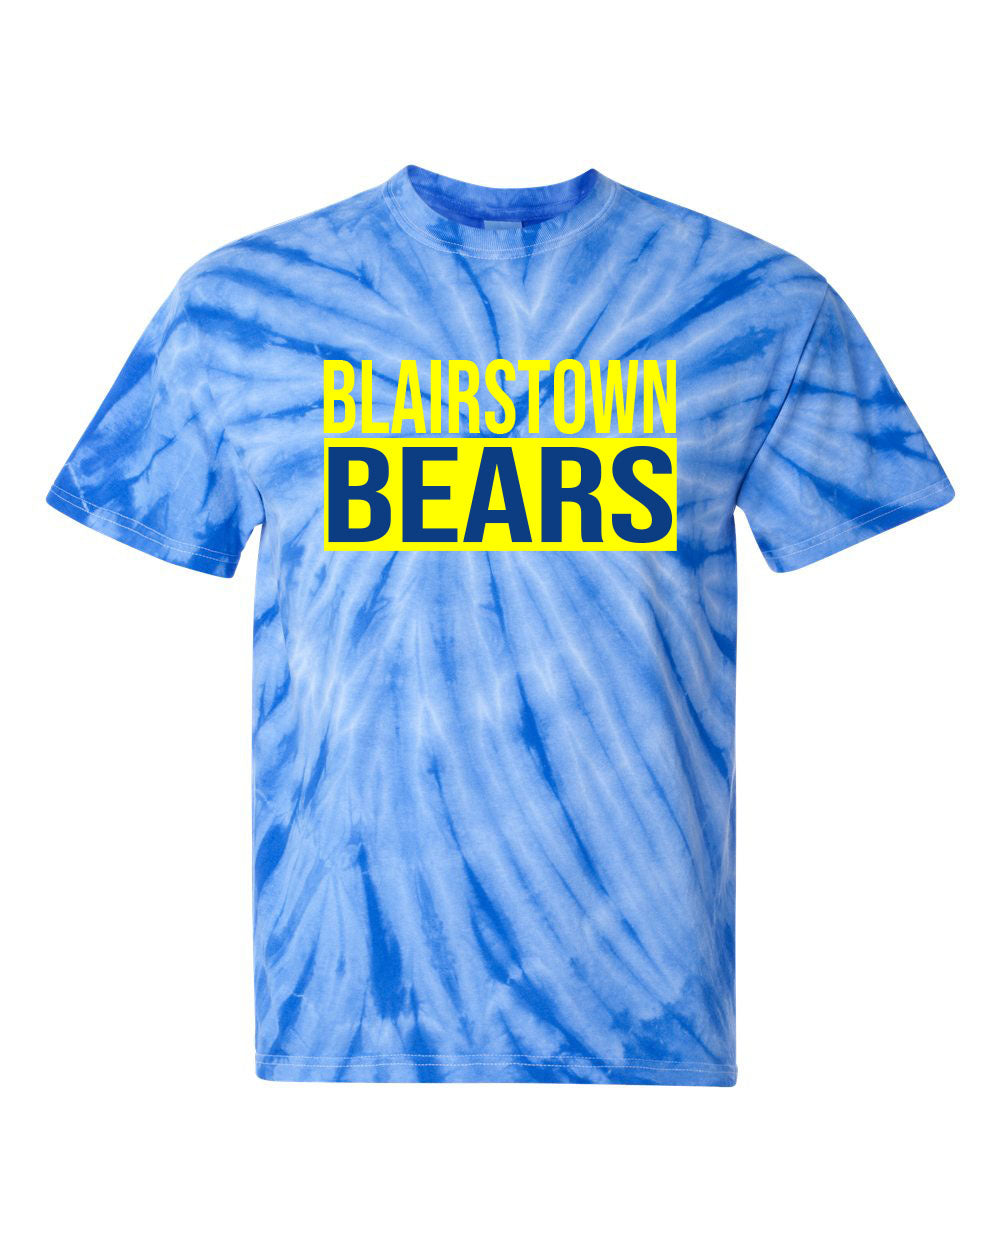 Blairstown Bears Tie Dye t-shirt Design 12